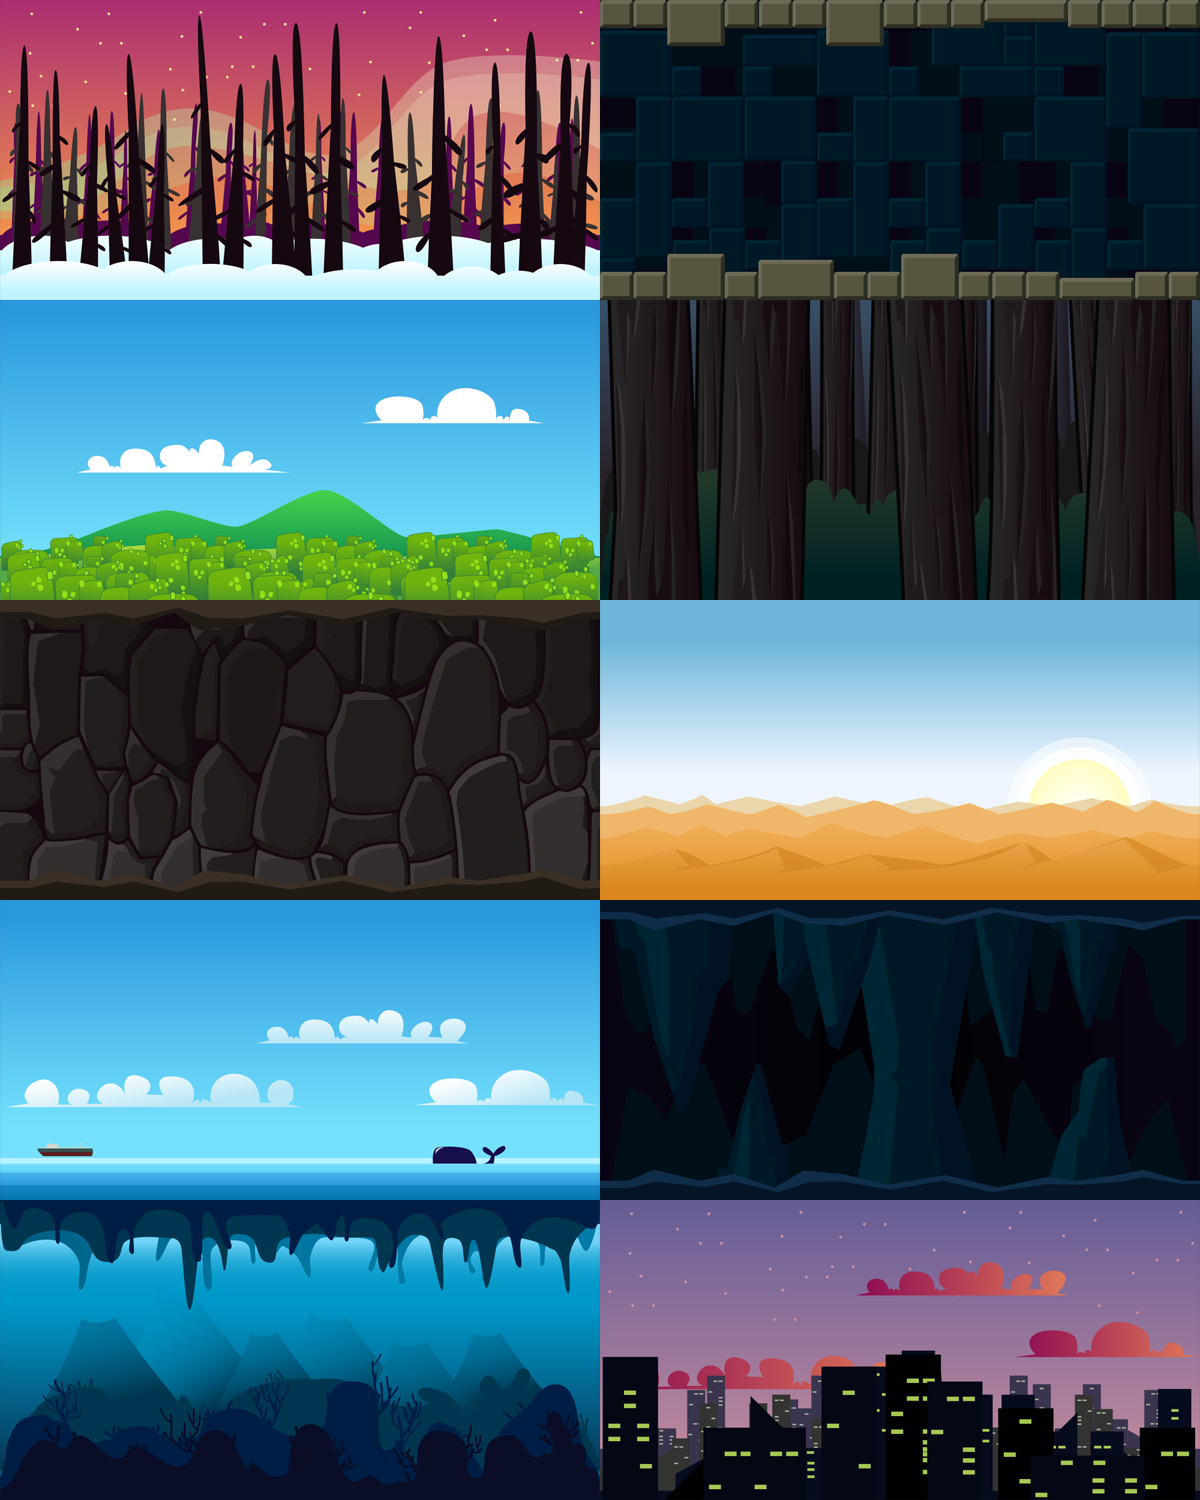 2D Game Background animation by Sobeks on DeviantArt